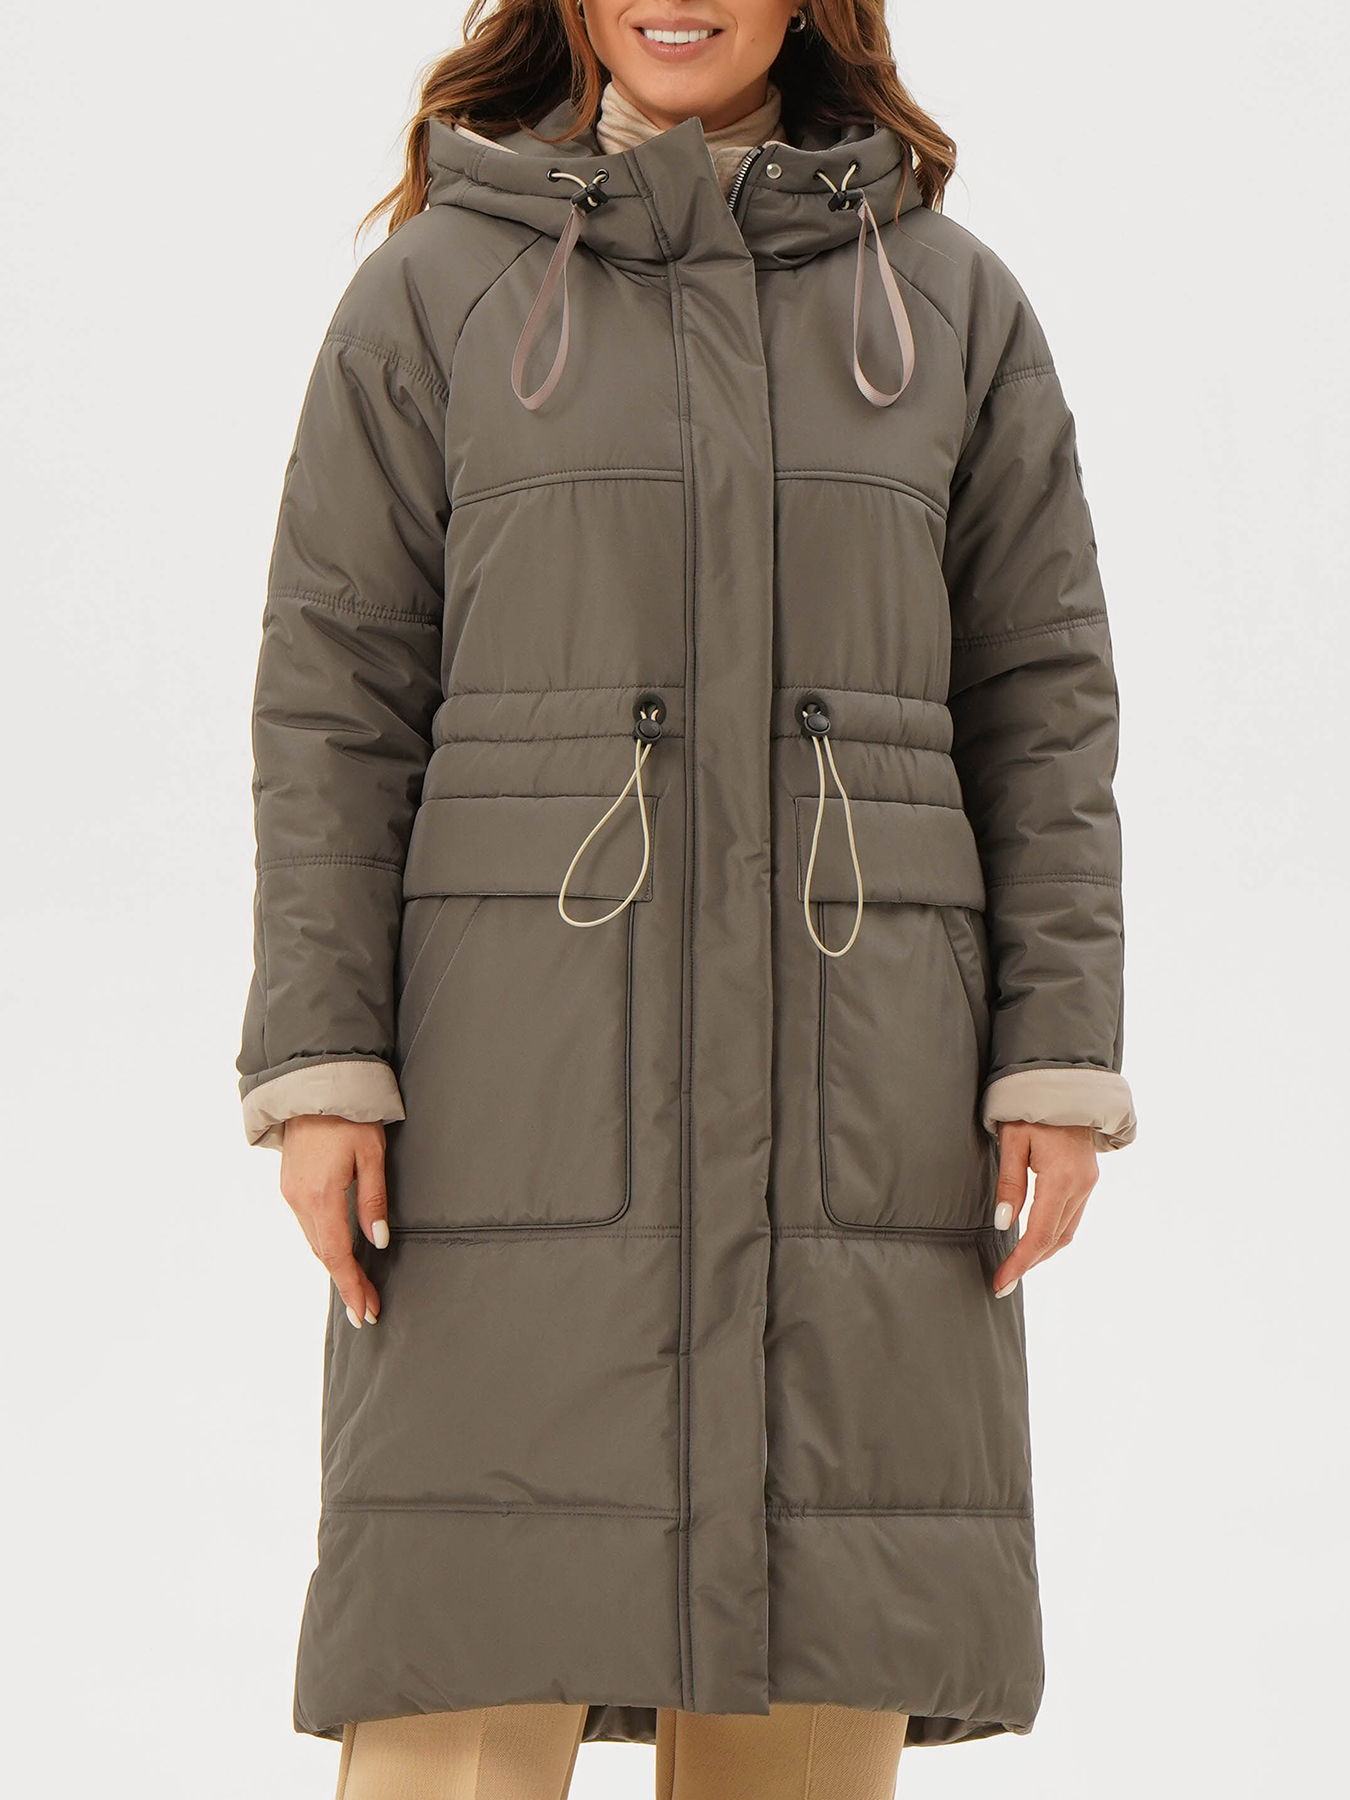 Пальто зимнее Maritta 433583-026, цвет хаки, размер 50 - фото 1